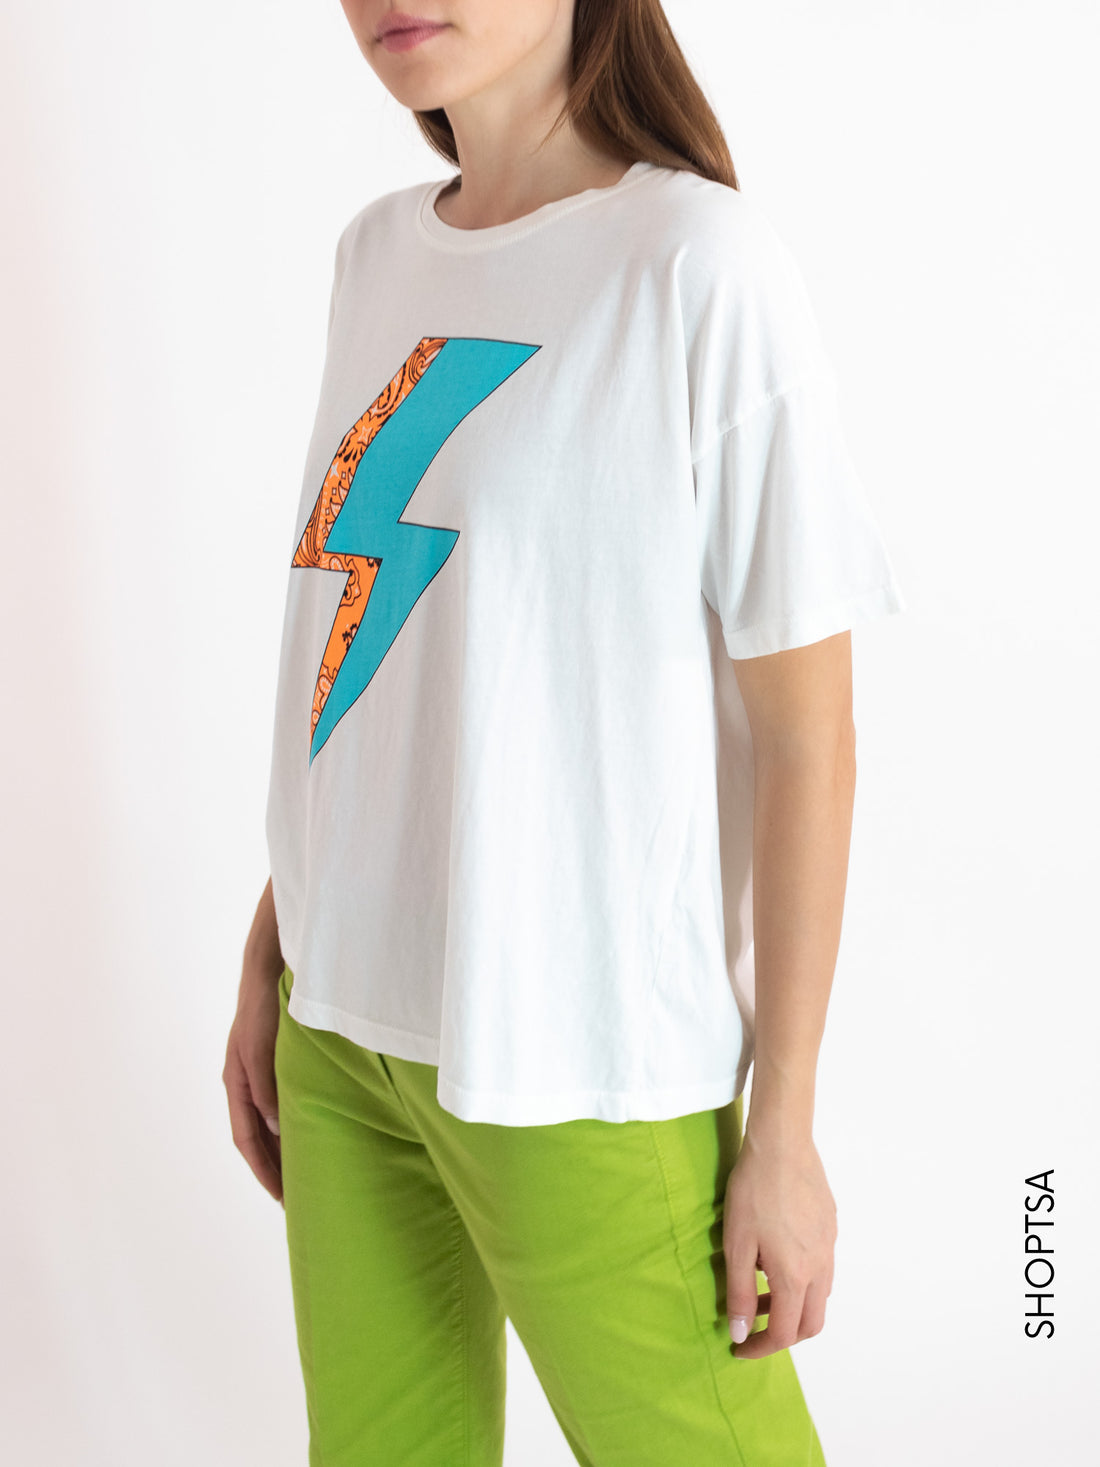 Lightning t-shirt Rh0528 - ViCOLO